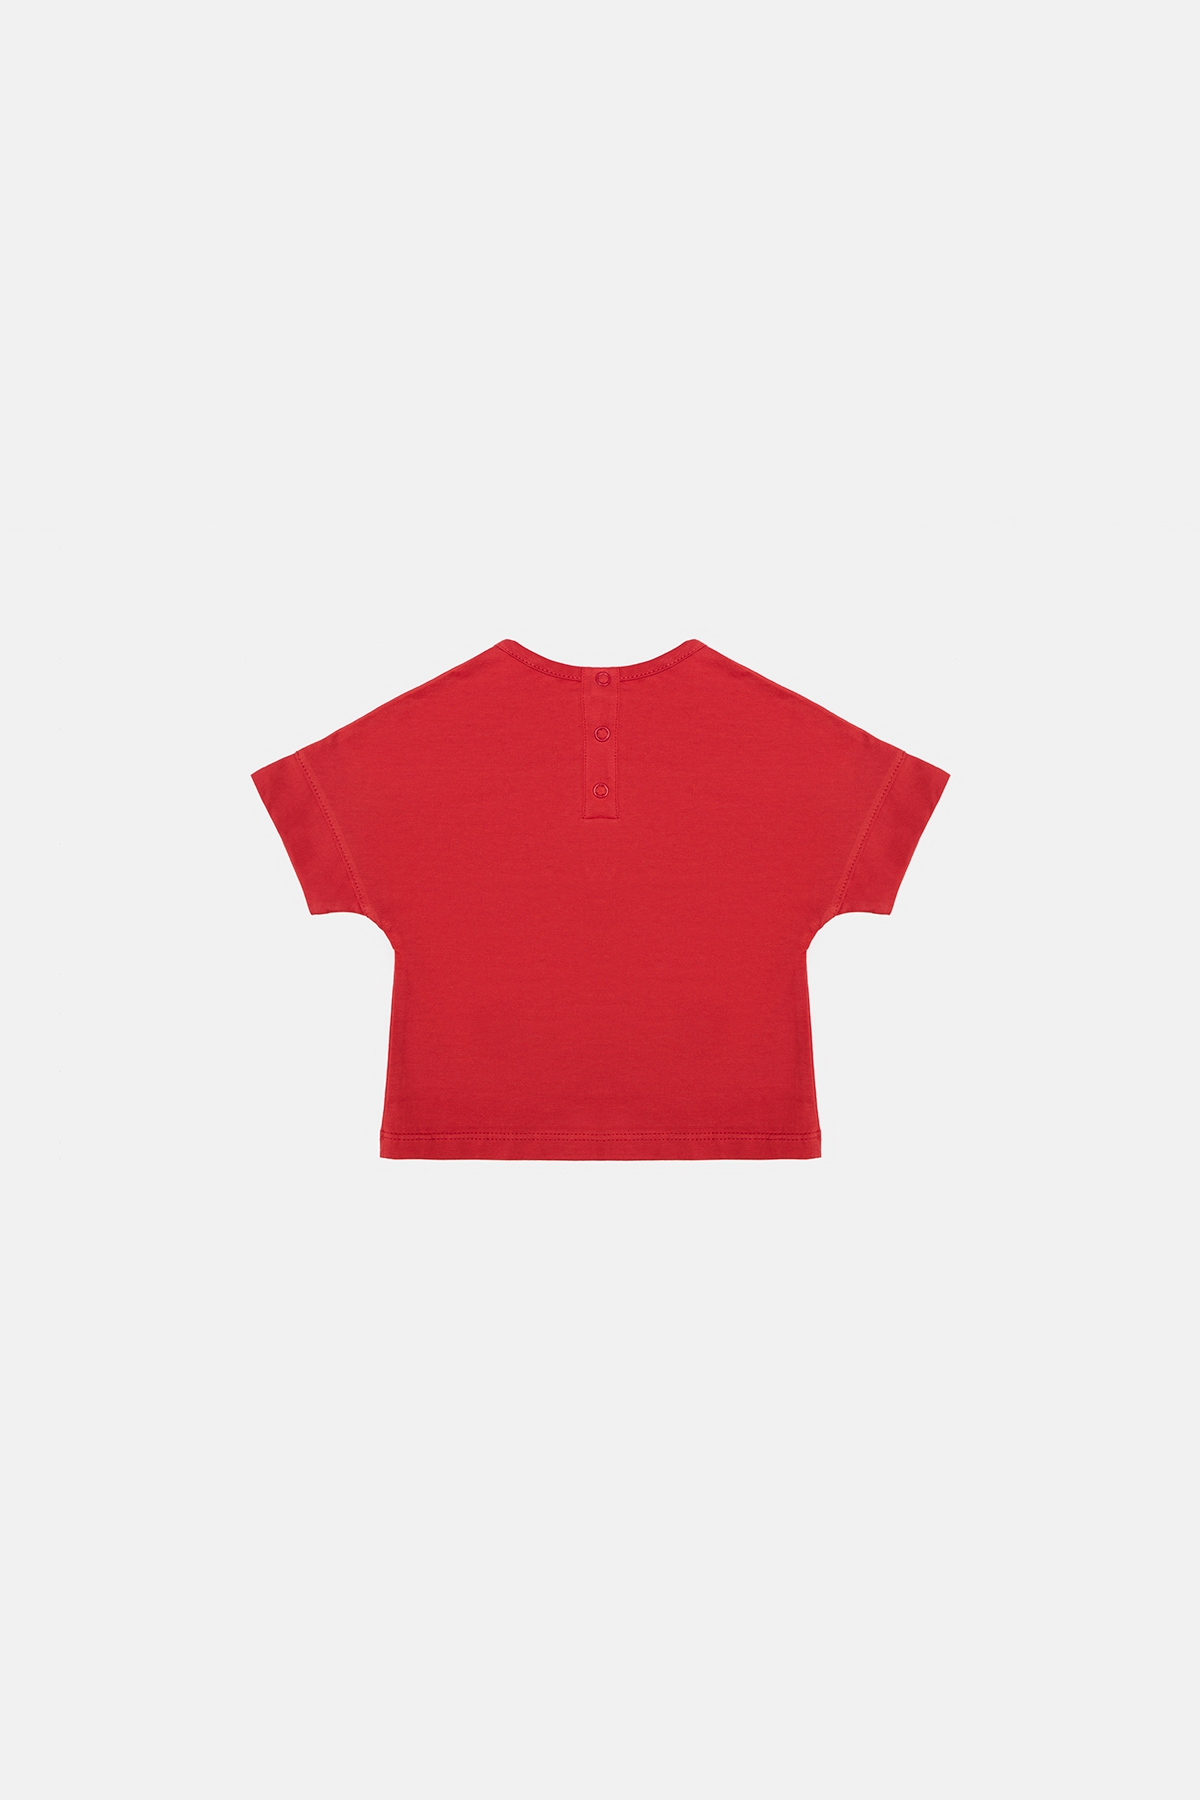 Erkek Bebek Kırmızı Tshirt